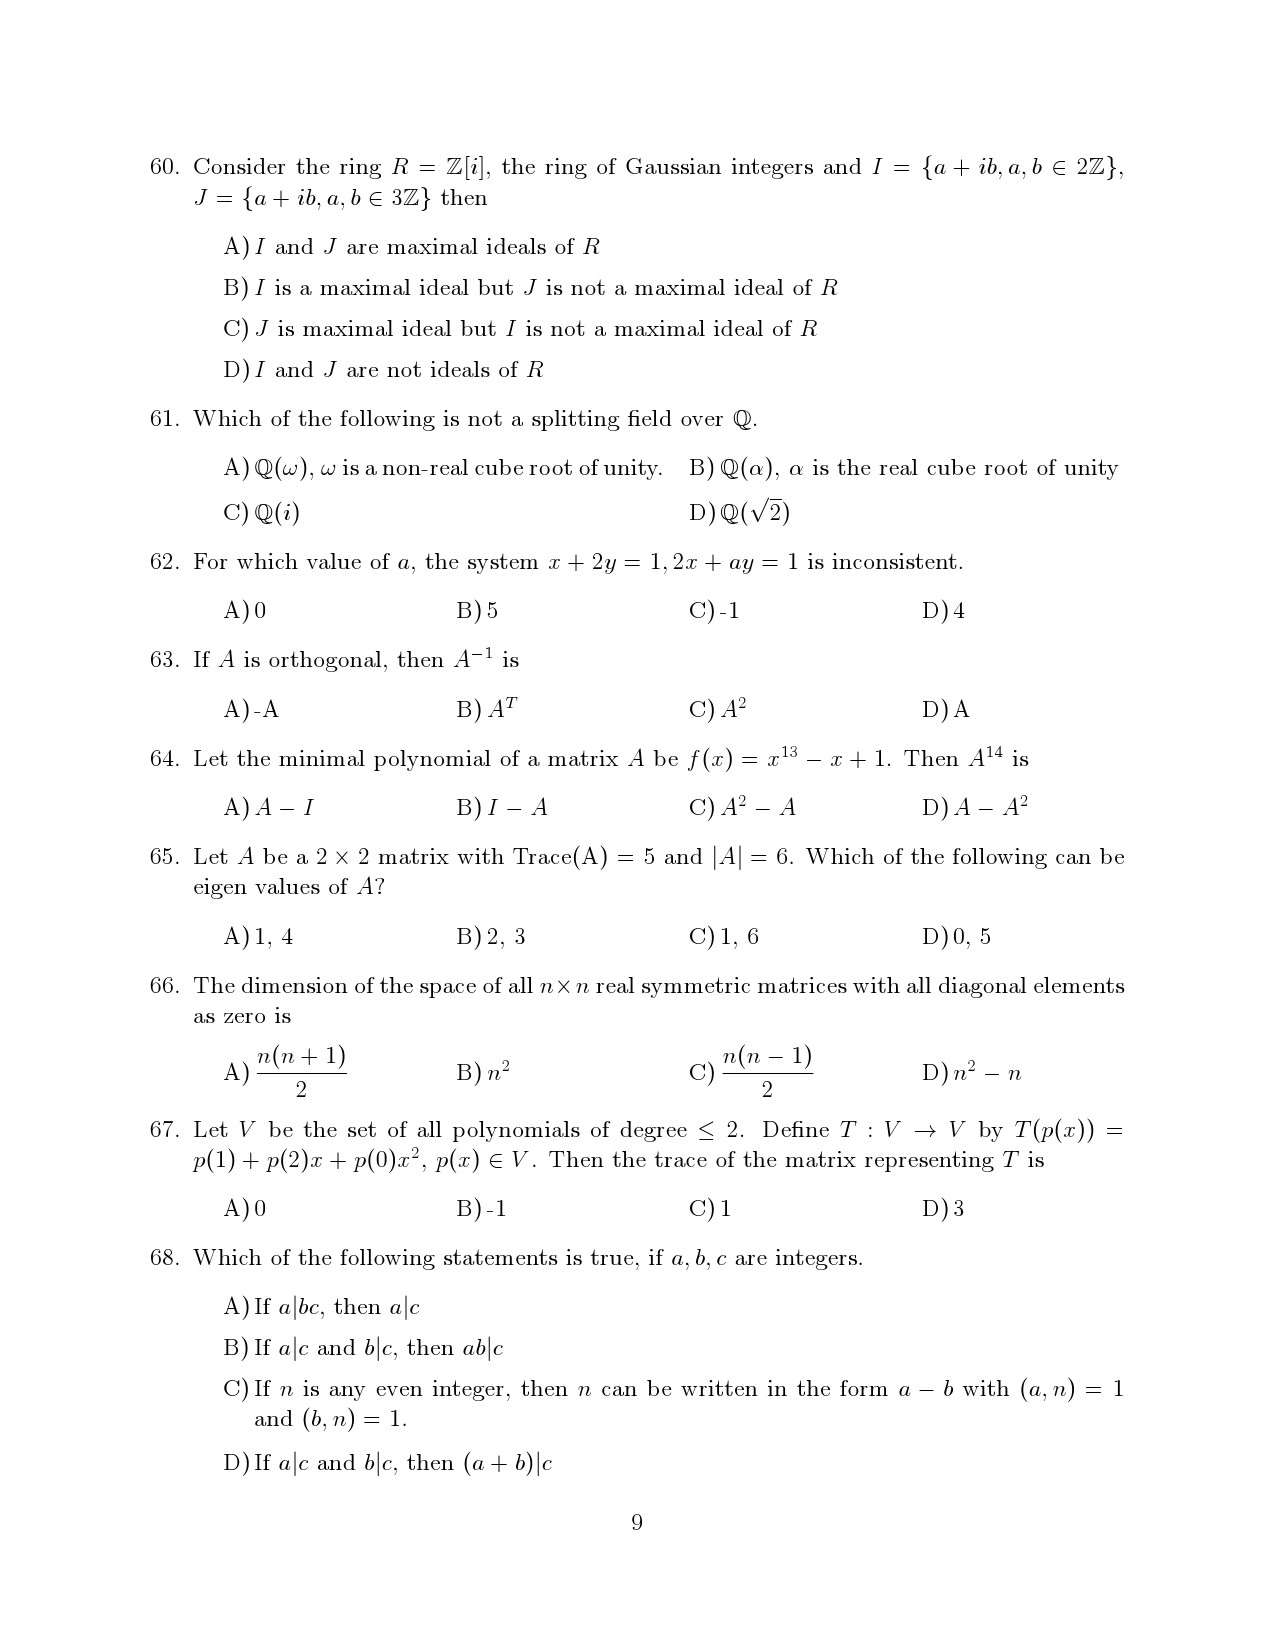 Kerala SET Mathematics Exam Question Paper July 2021 9